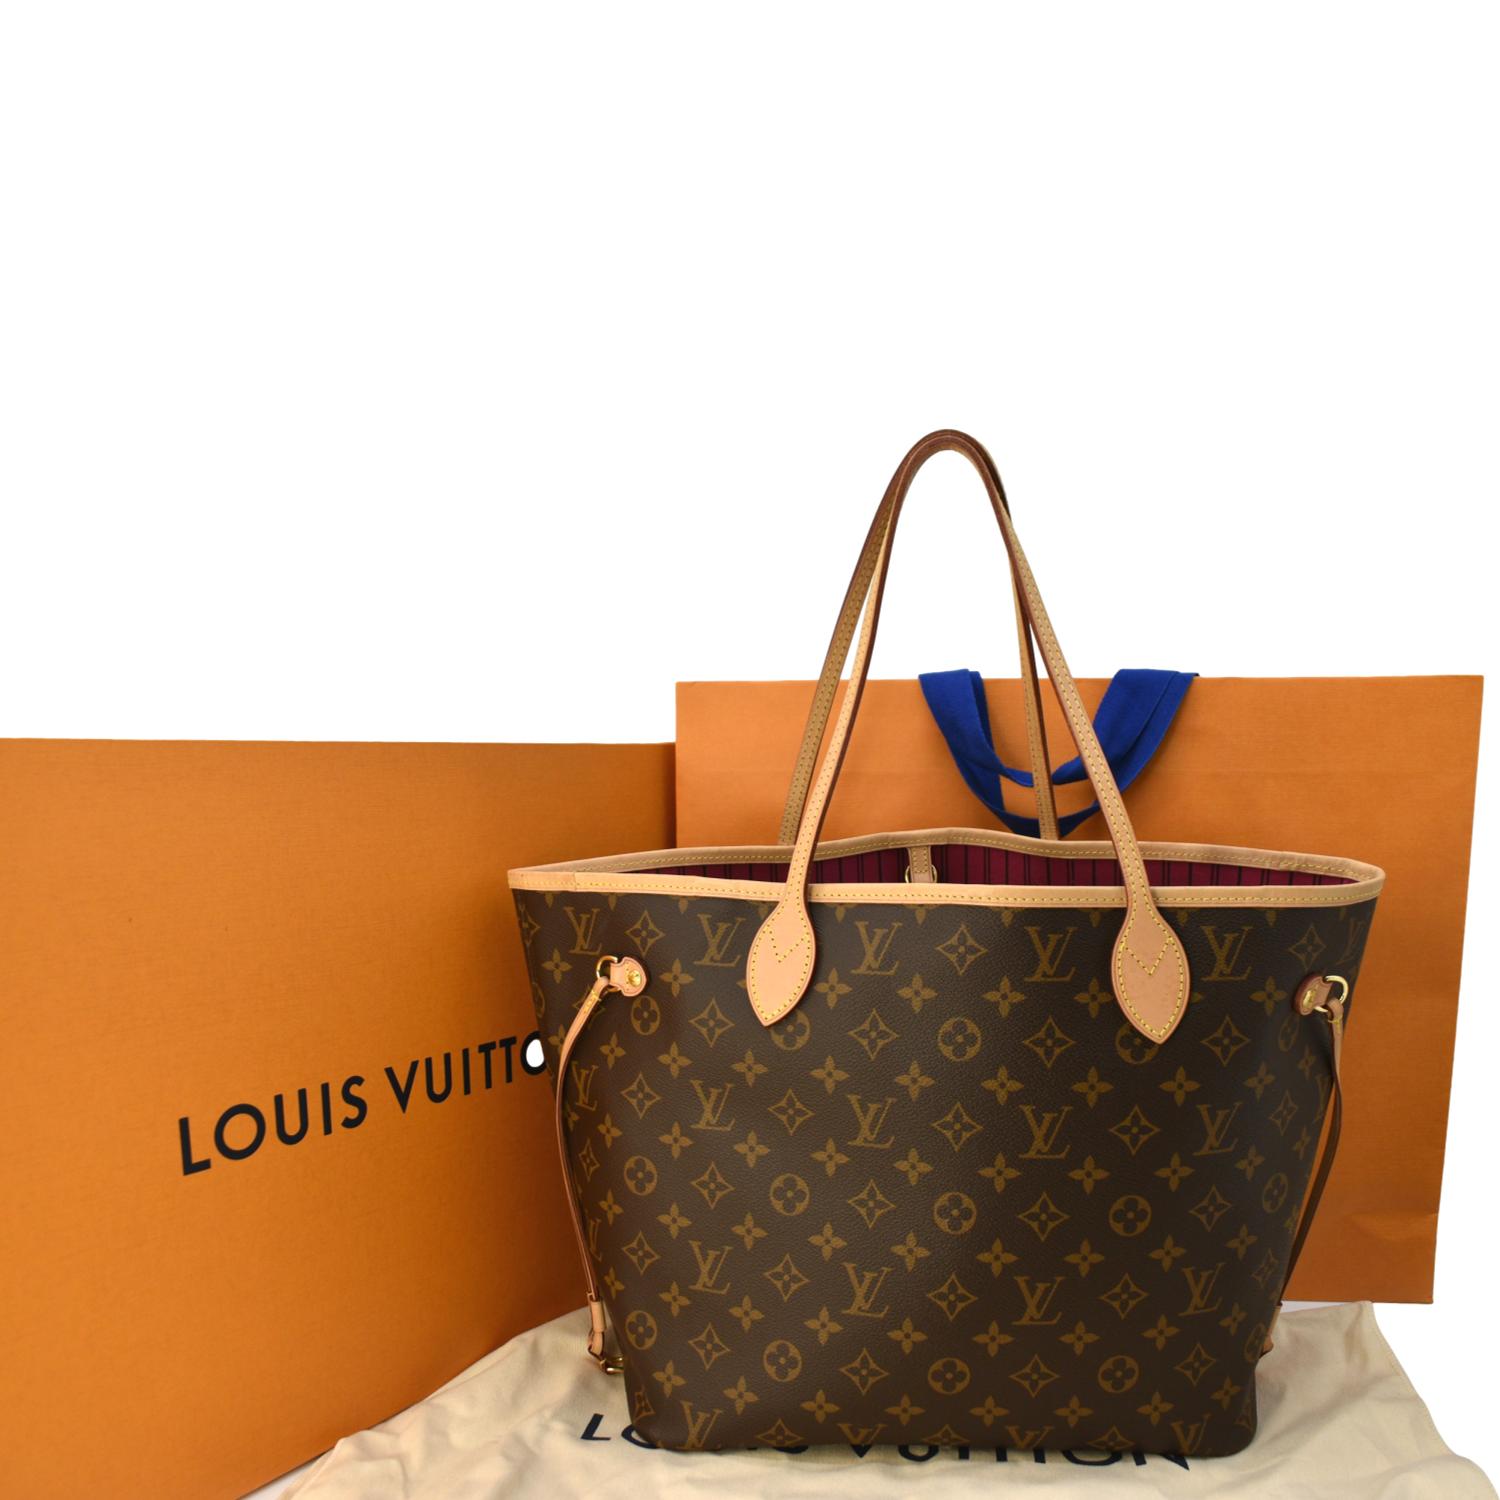 REP 1:1] Louis Vuitton Neverfull MM Tote Bag Monogram Canvas Brown